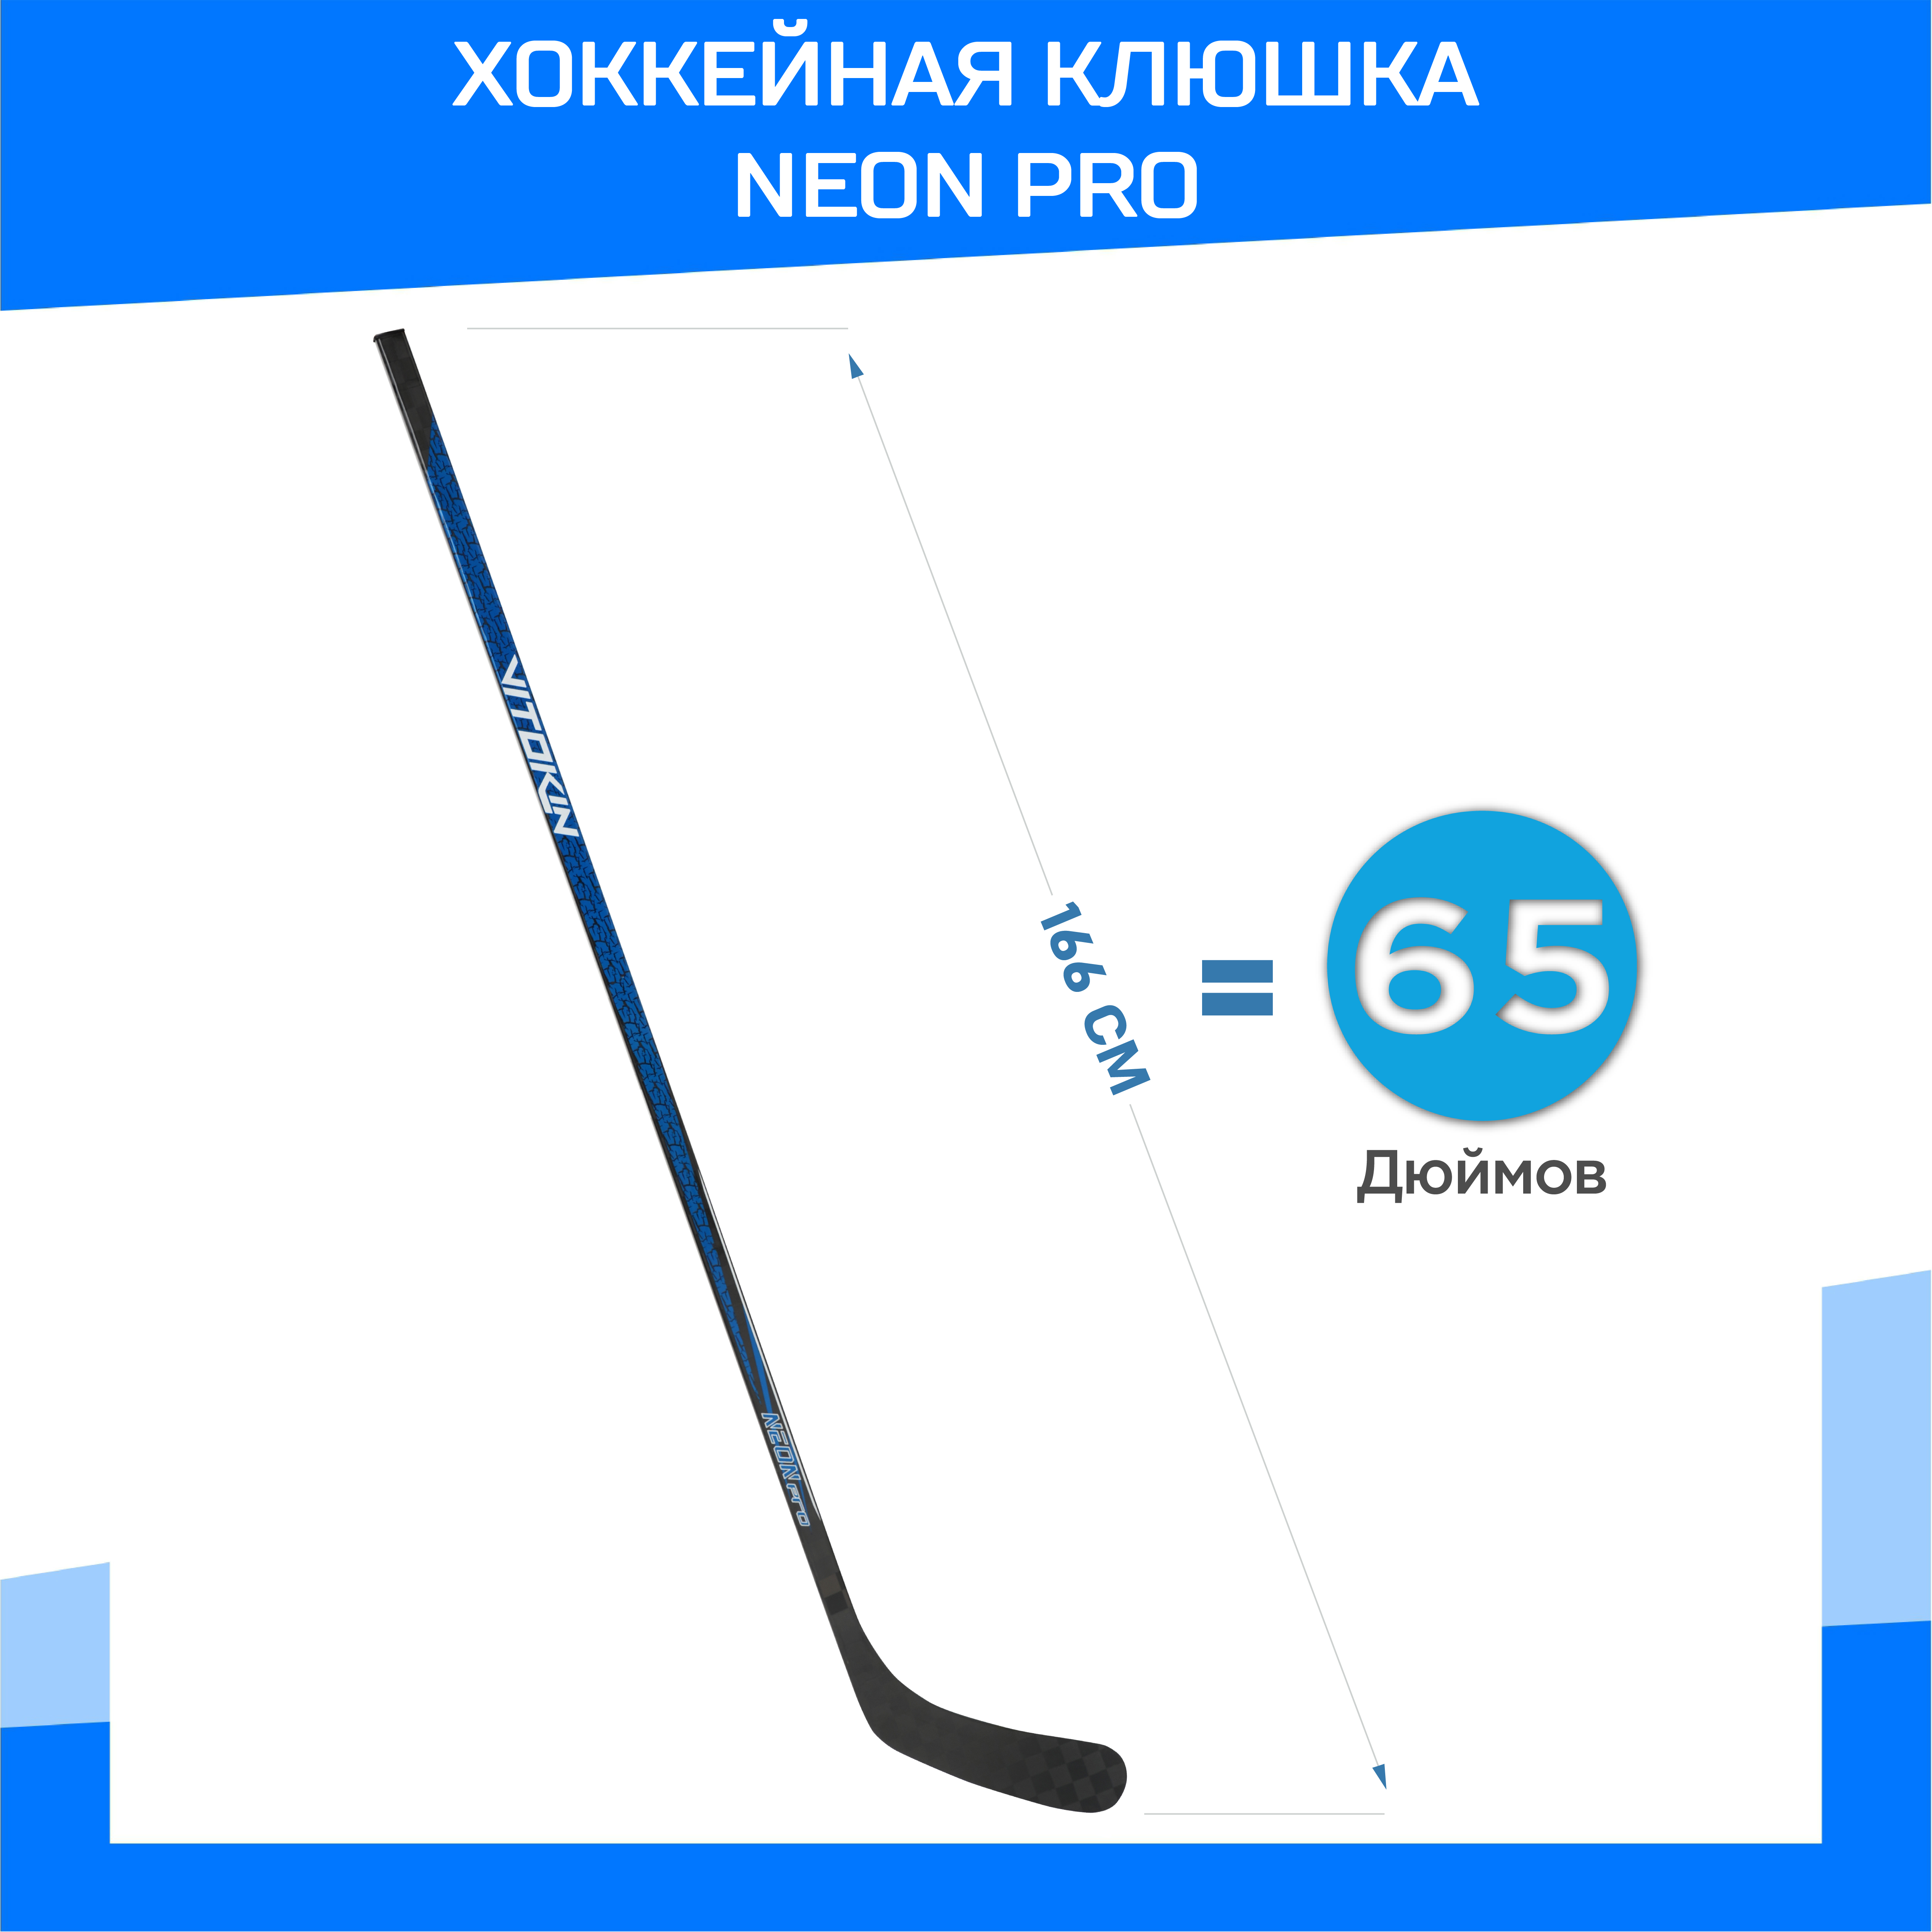 Хоккейная клюшка VITOKIN Neon Pro, 75 flex Левая, P92 загиб